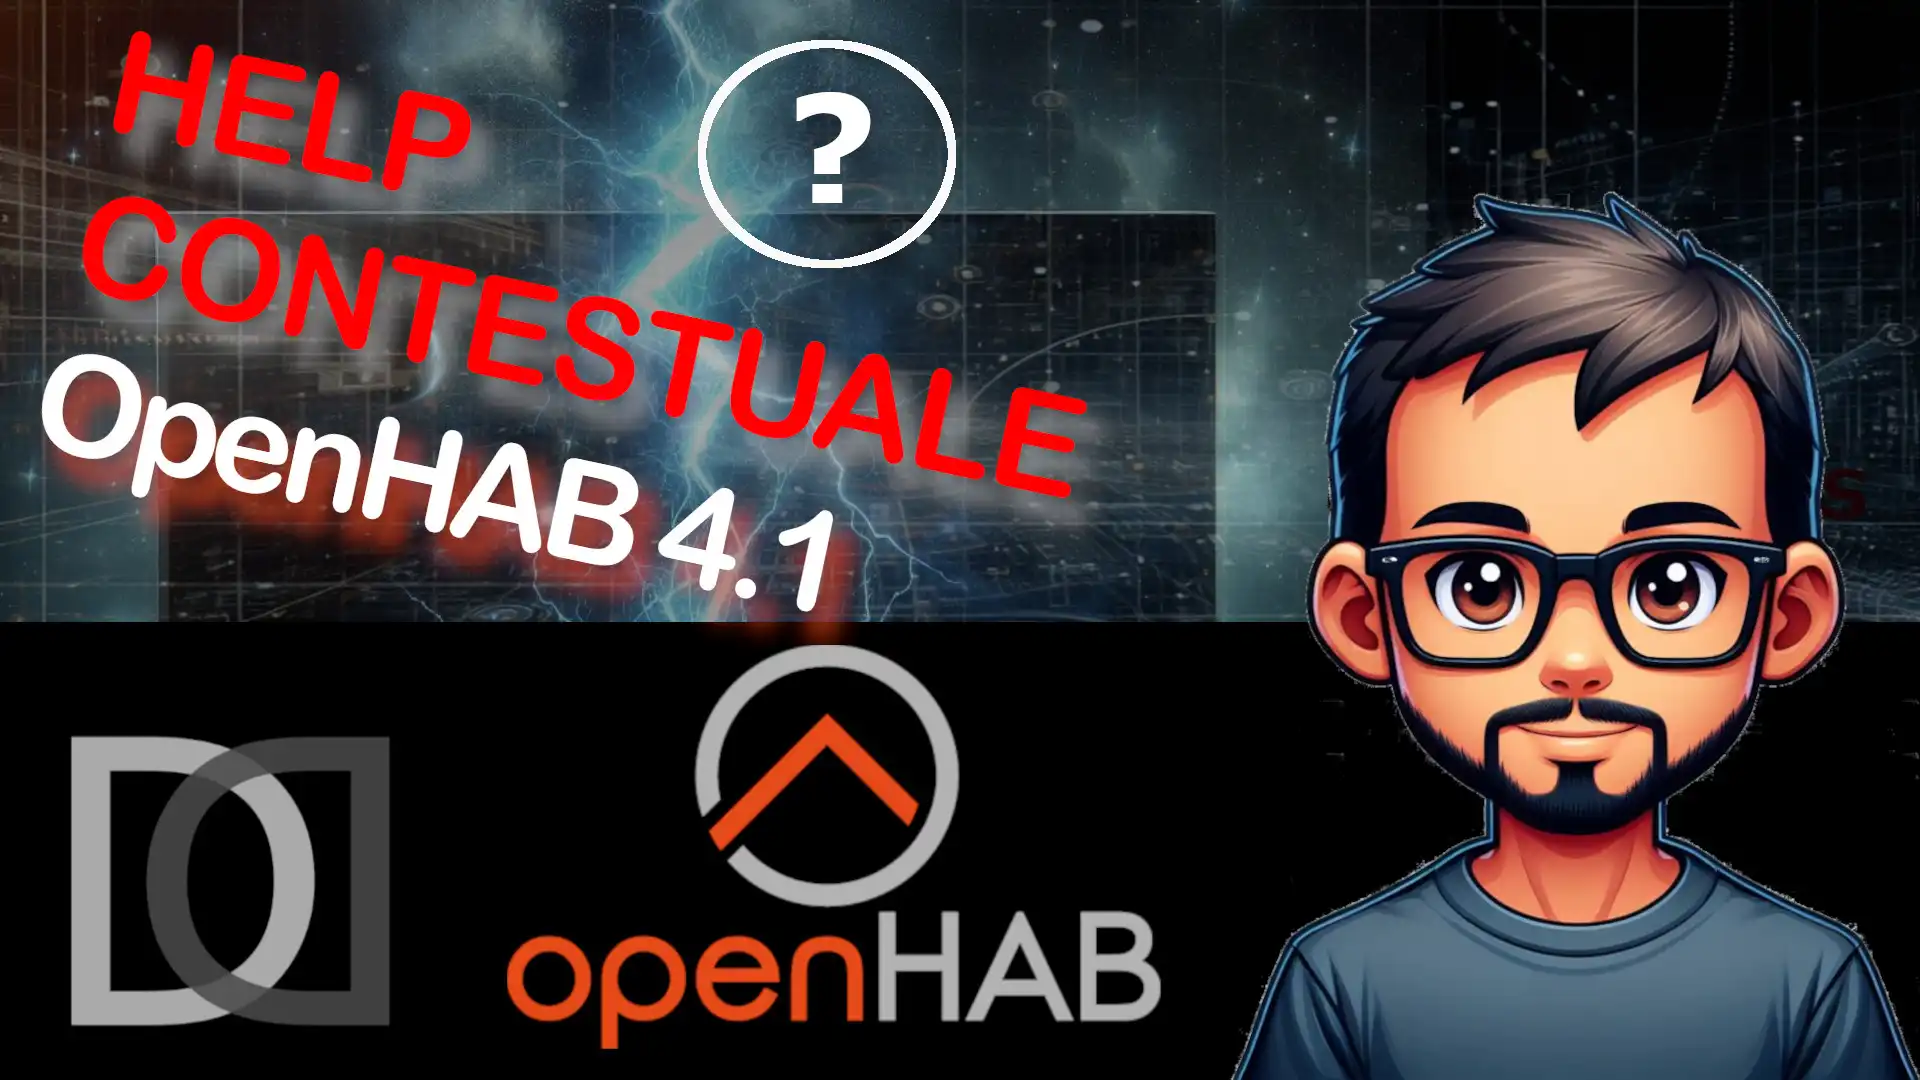 OpenHAB 4.1 - Help Contestuale, molto comodo - Video - Home Automation System